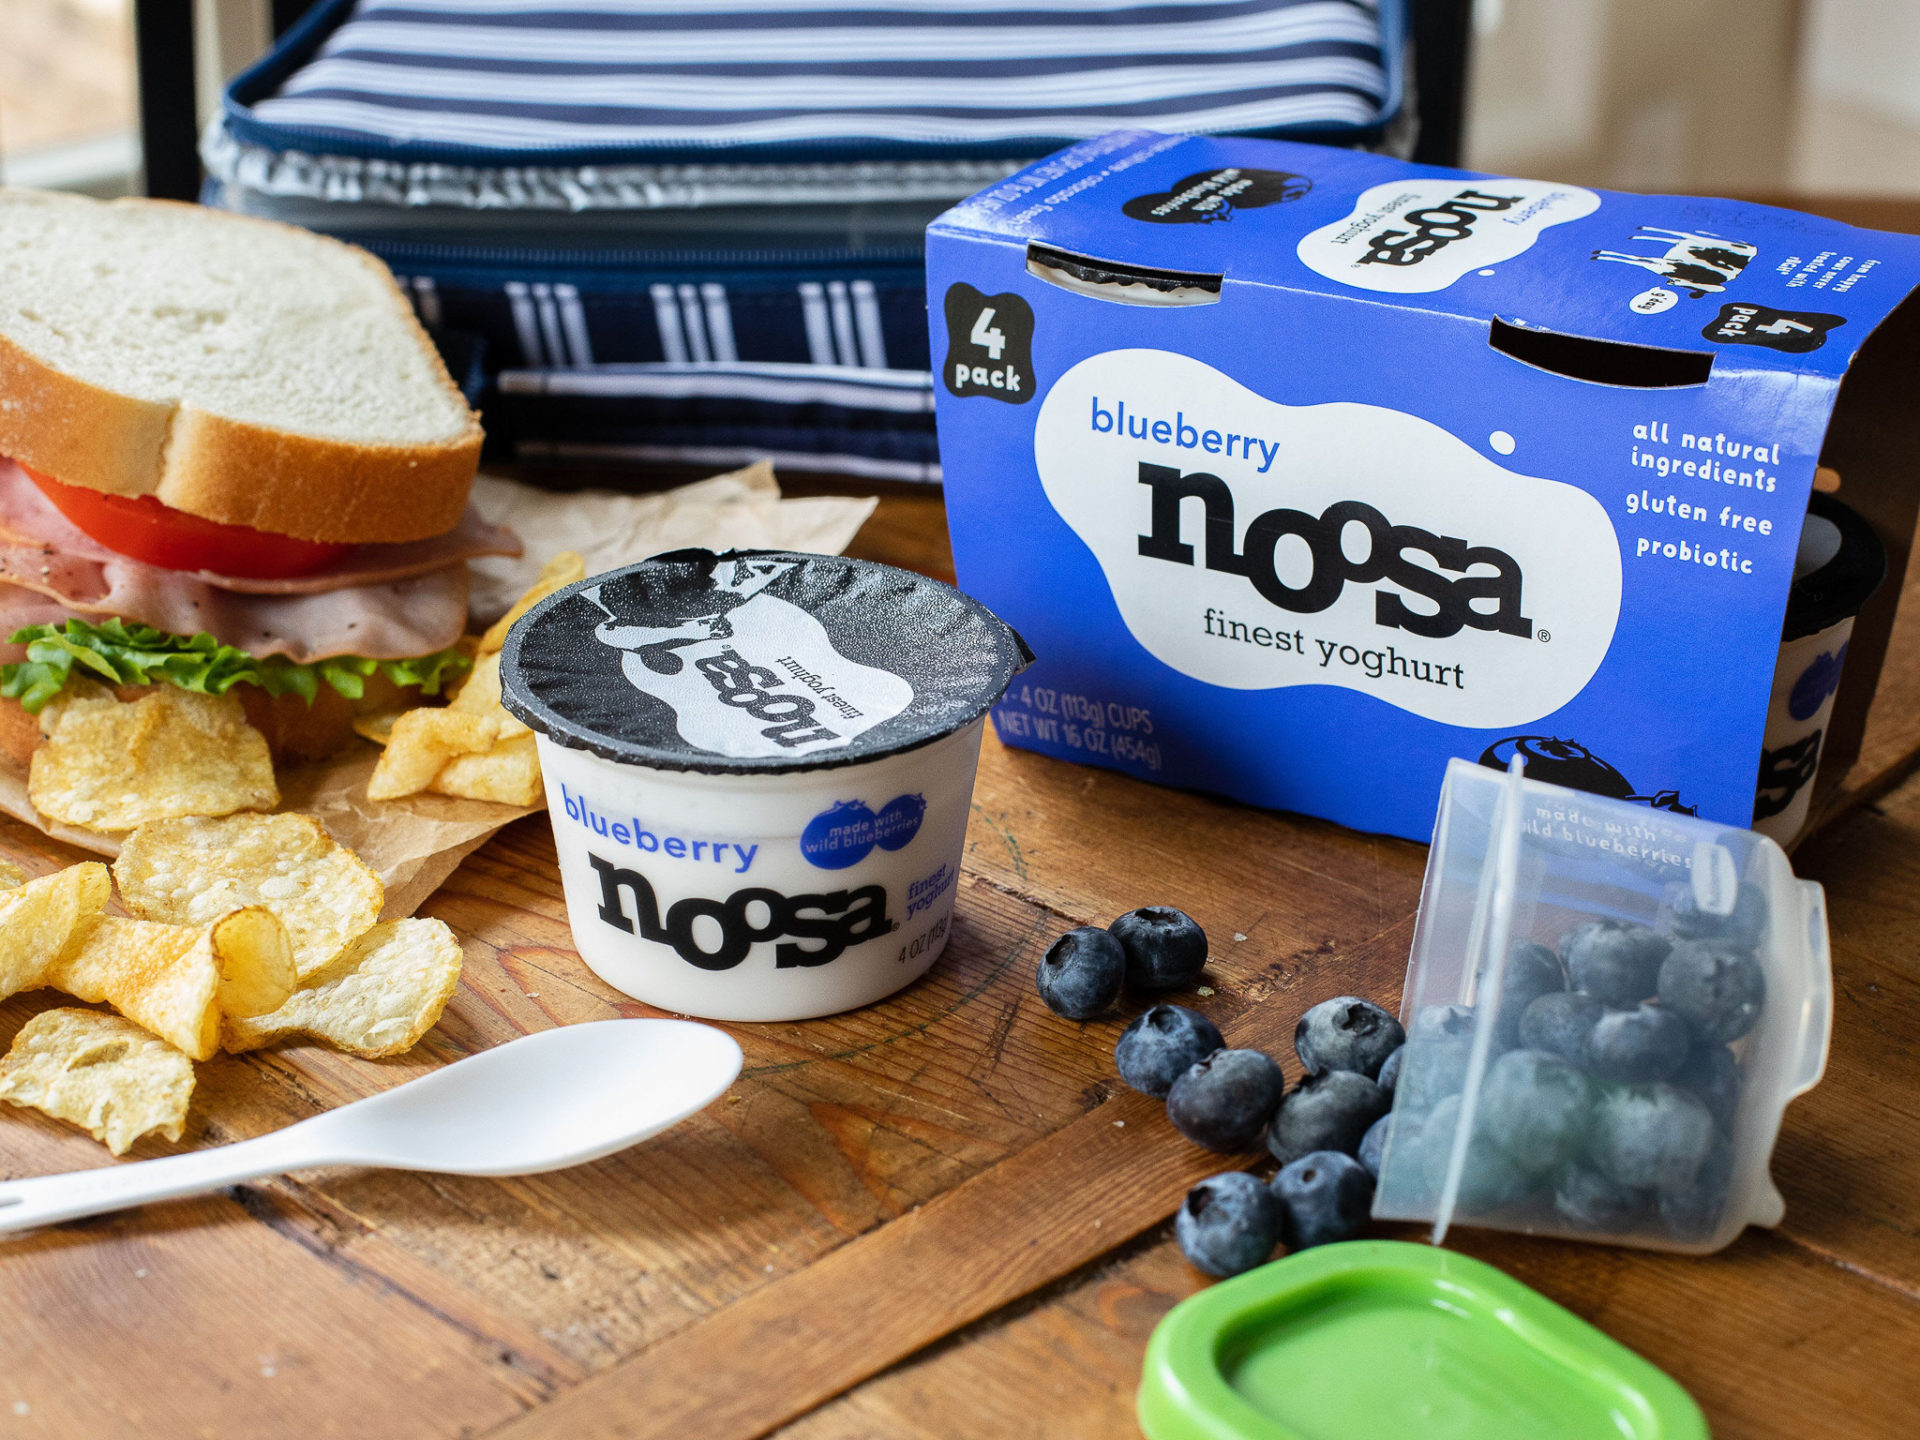 4-Pack Of Noosa Yogurt Just $2.24 At Kroger – Just 56¢ Per Cup